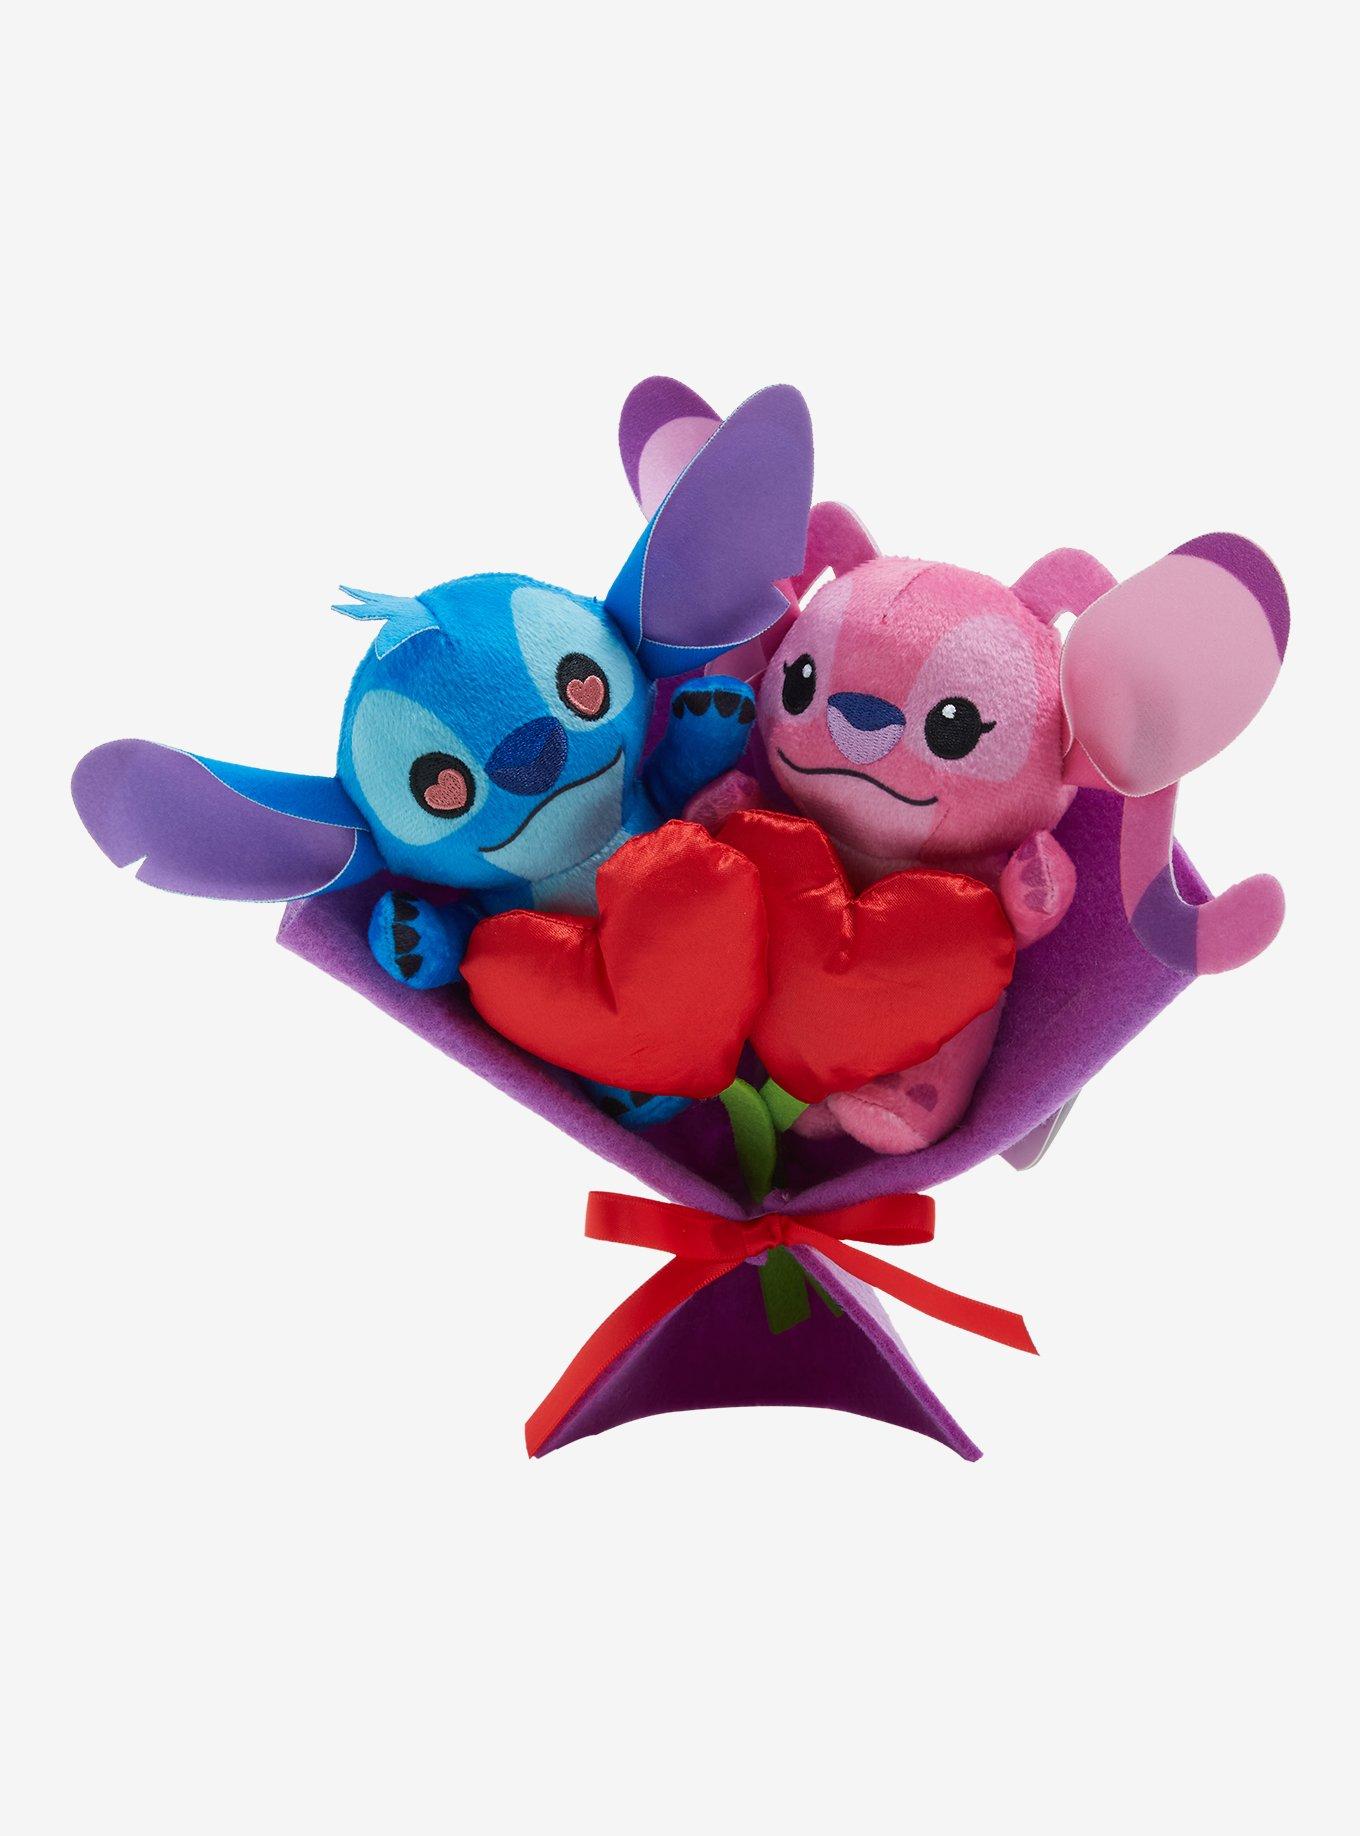 Disney Handmade Cartoon Lilo Stitch Plush Doll Toys Rose Bouquet Gift Box  Home Stuffed Creative Valentine Christmas Gifts - AliExpress